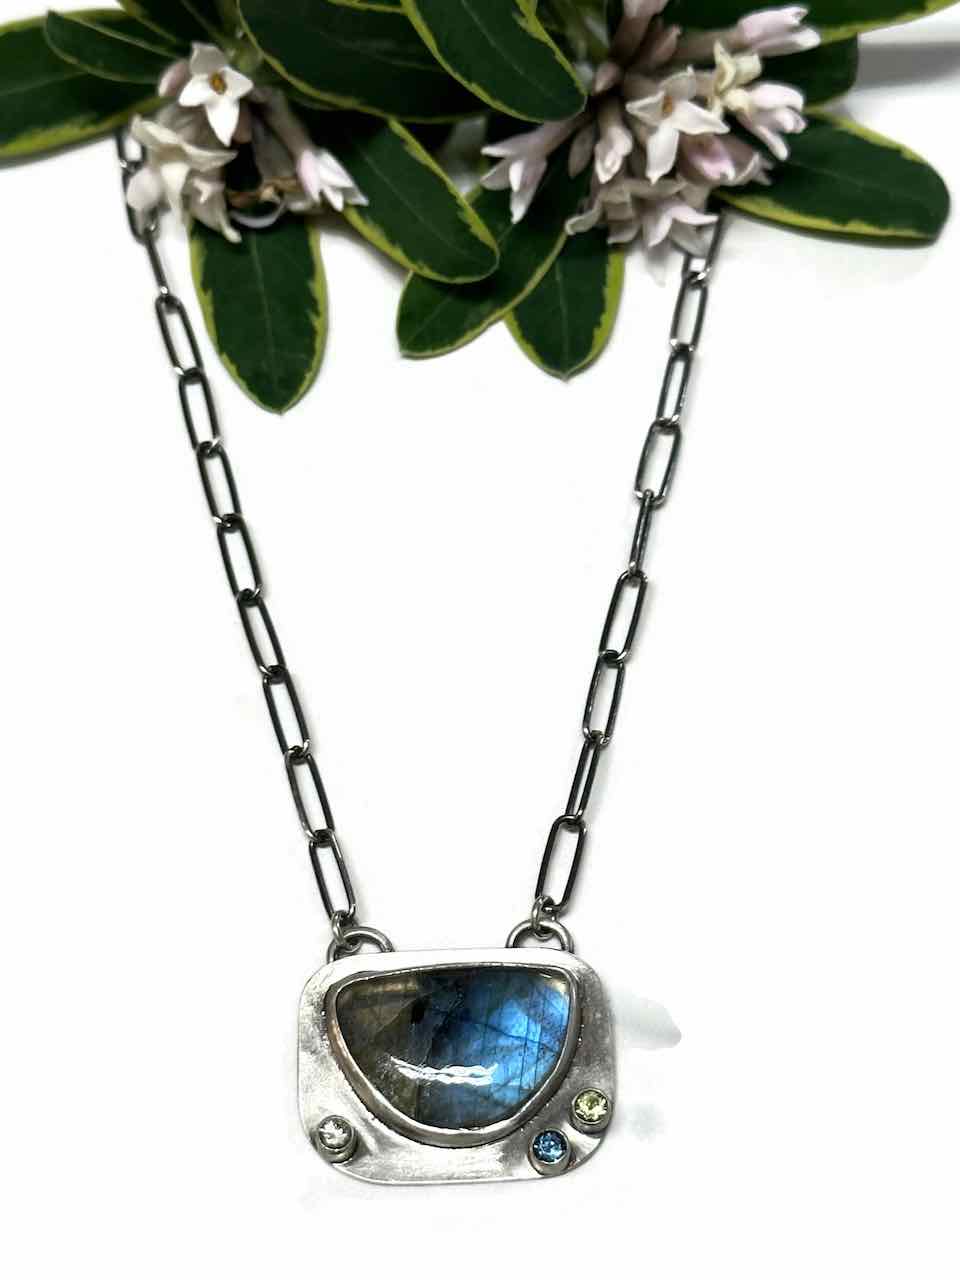 Blue Labradorite Necklace